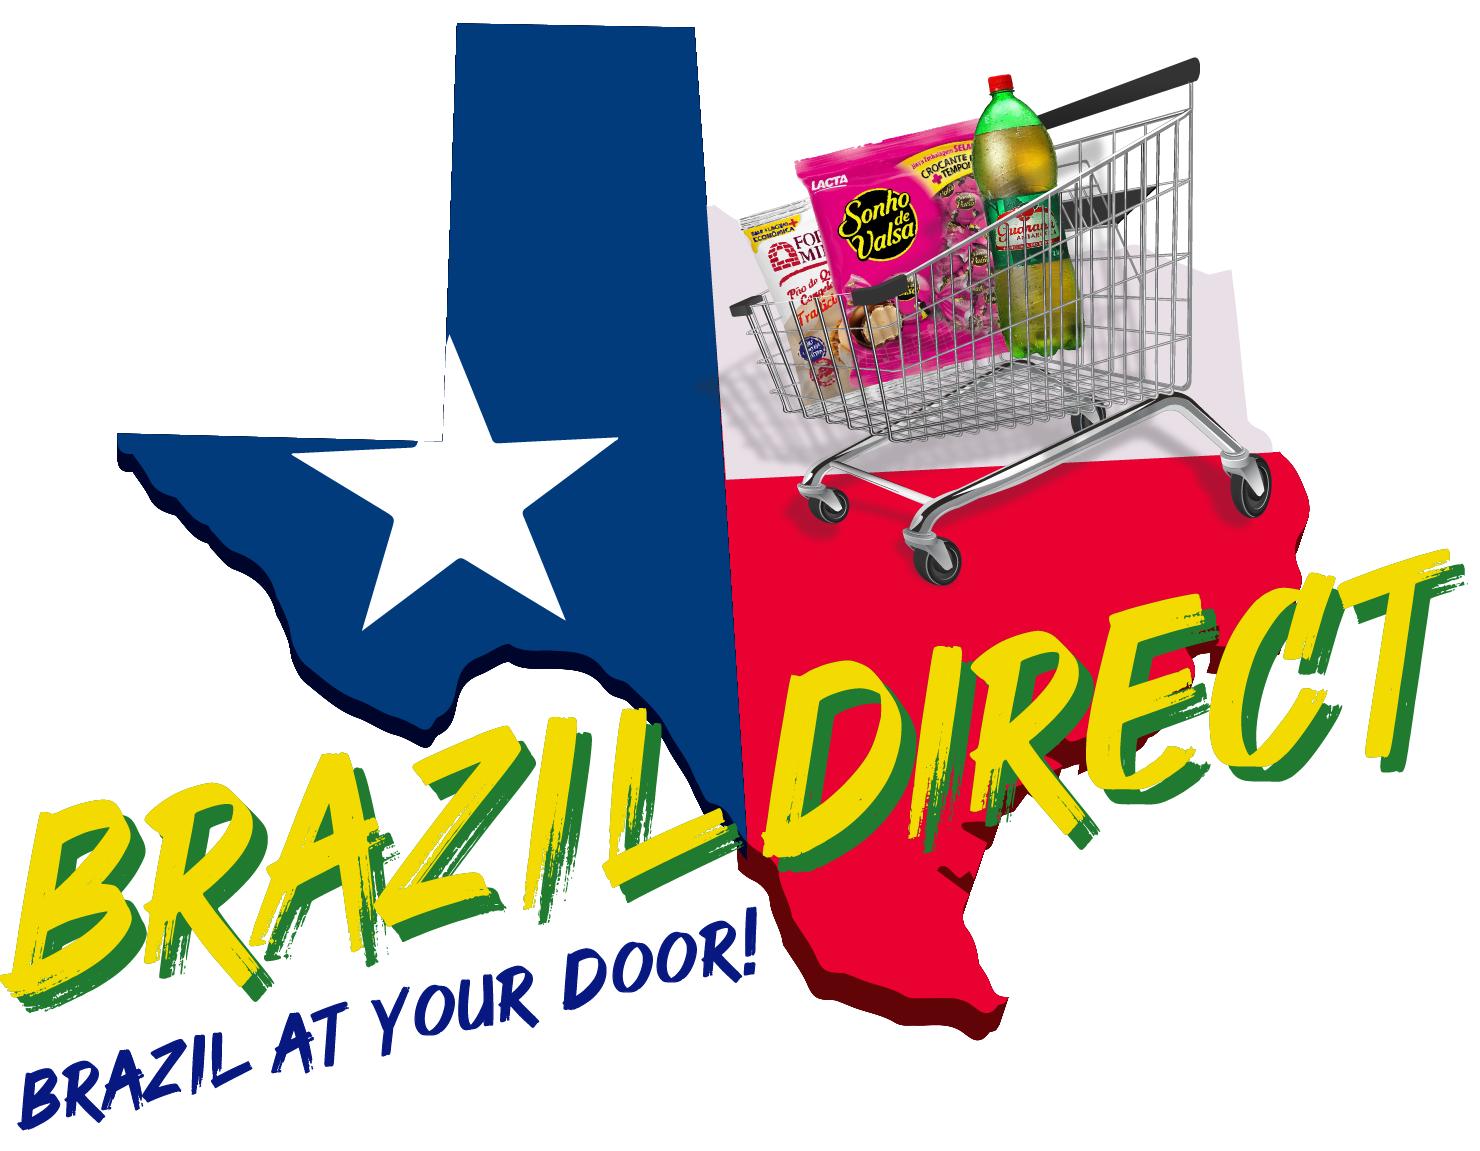 Brazil Direct Market | Brazil at your door!